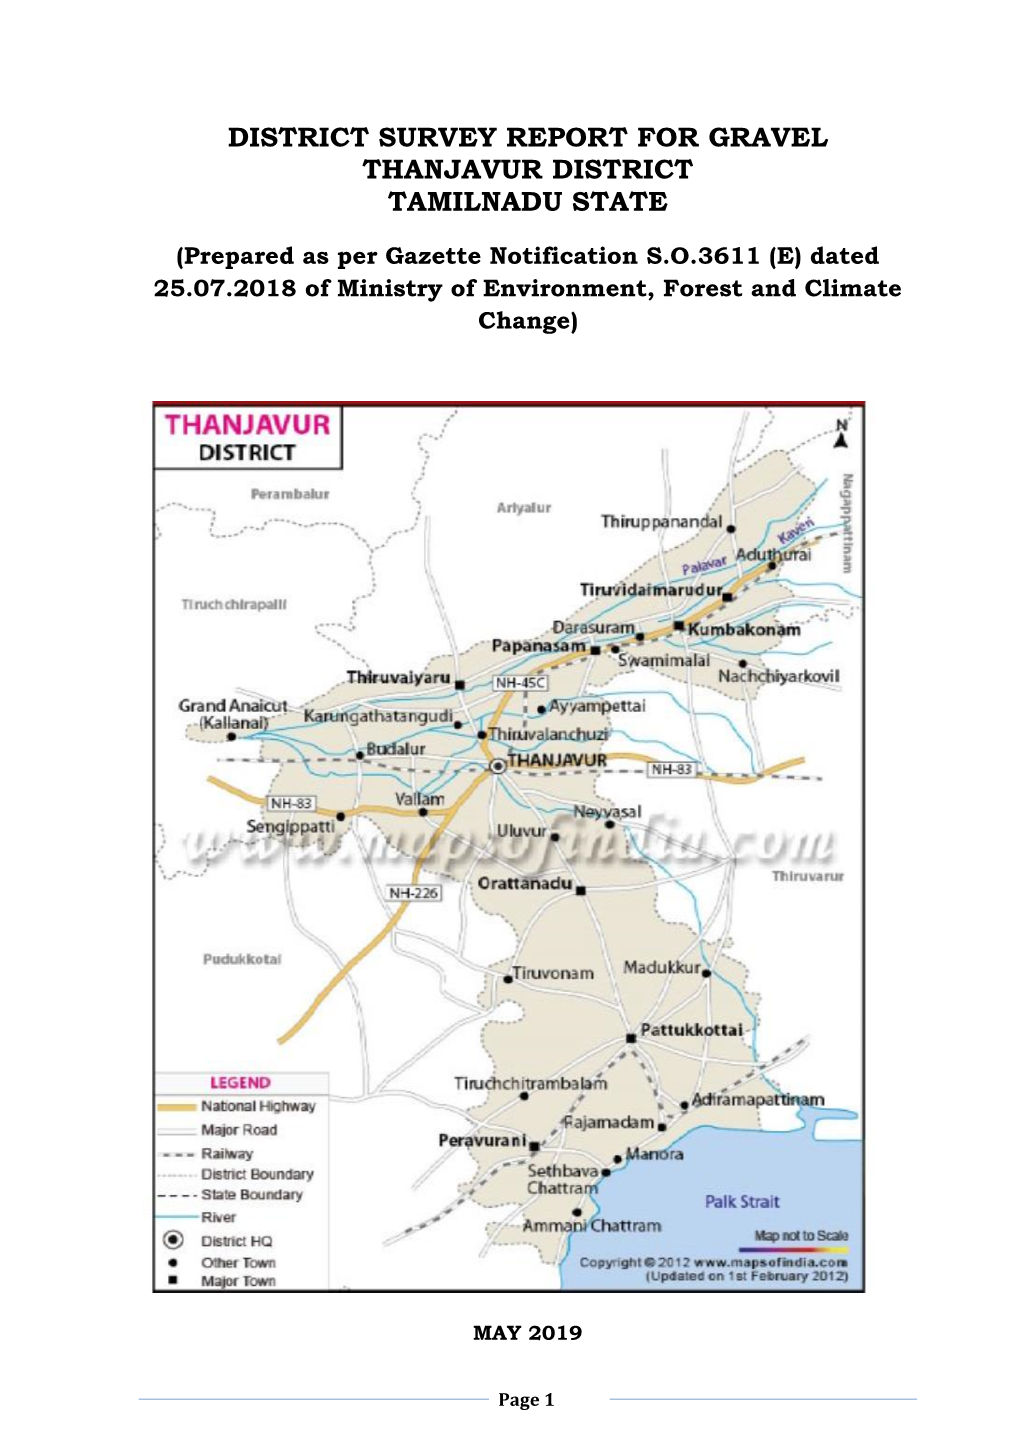 District Survey Report for Gravel Thanjavur District Tamilnadu State